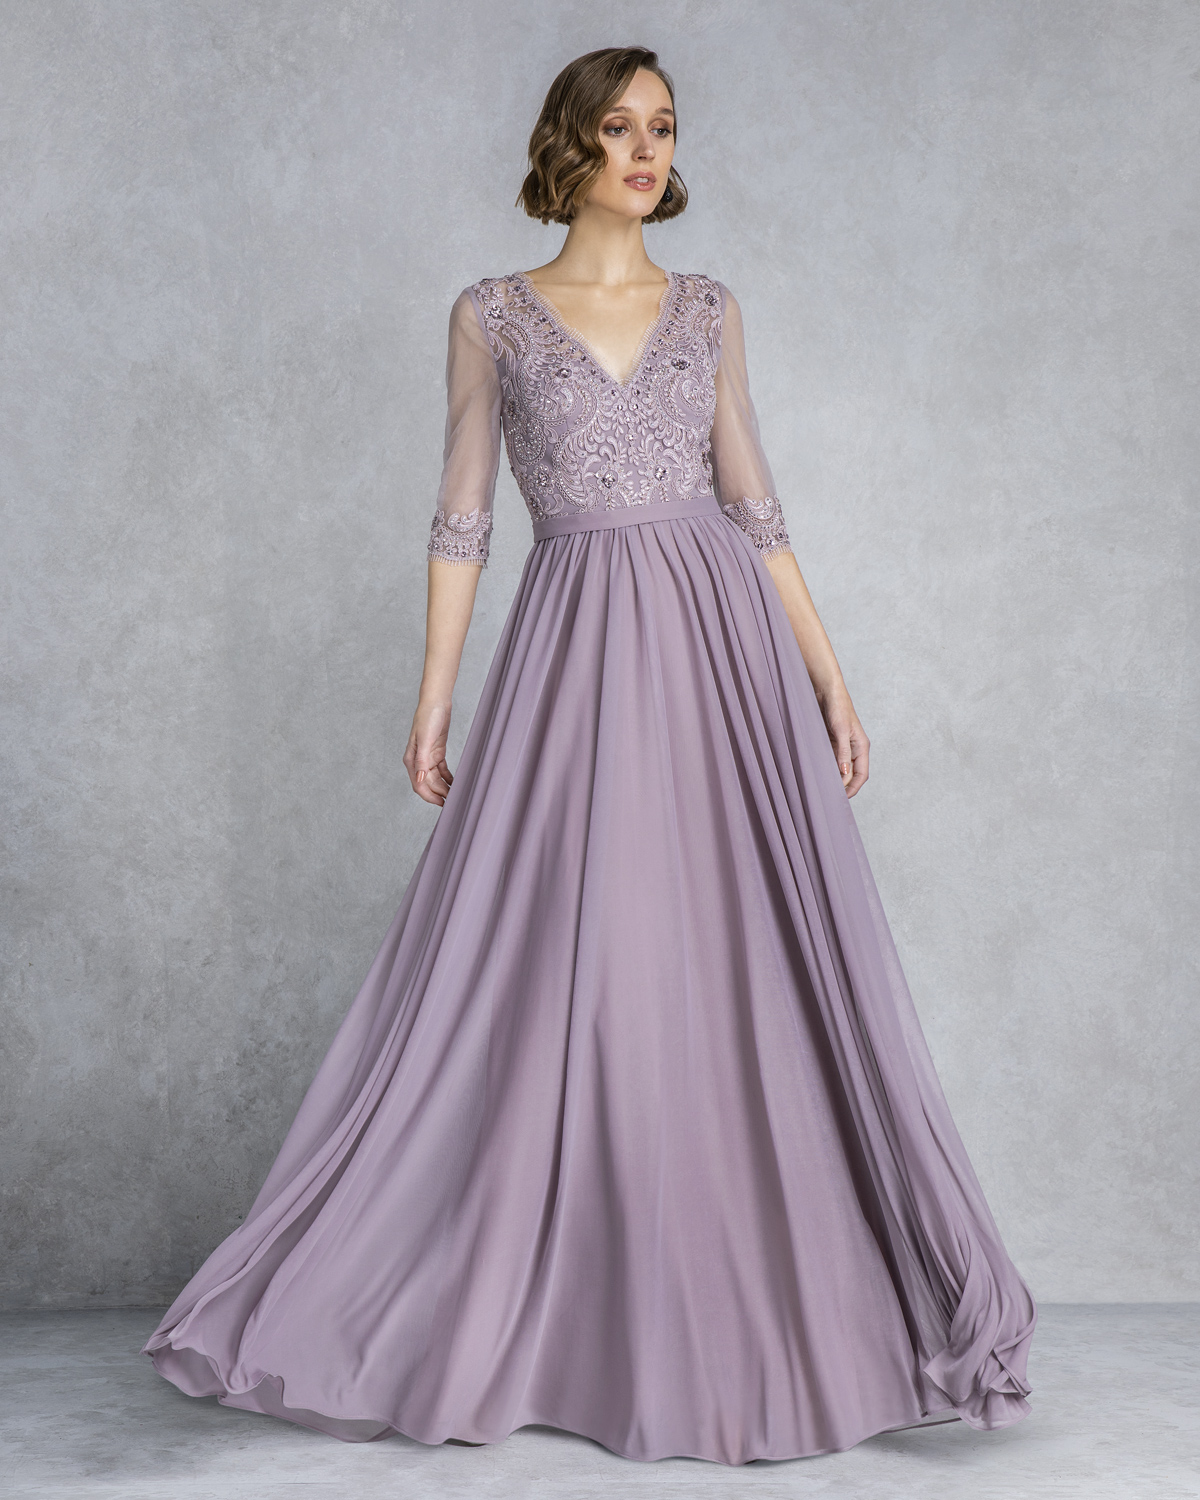 Классические платья / Long mother of the bride evening dress with beading and sleeves